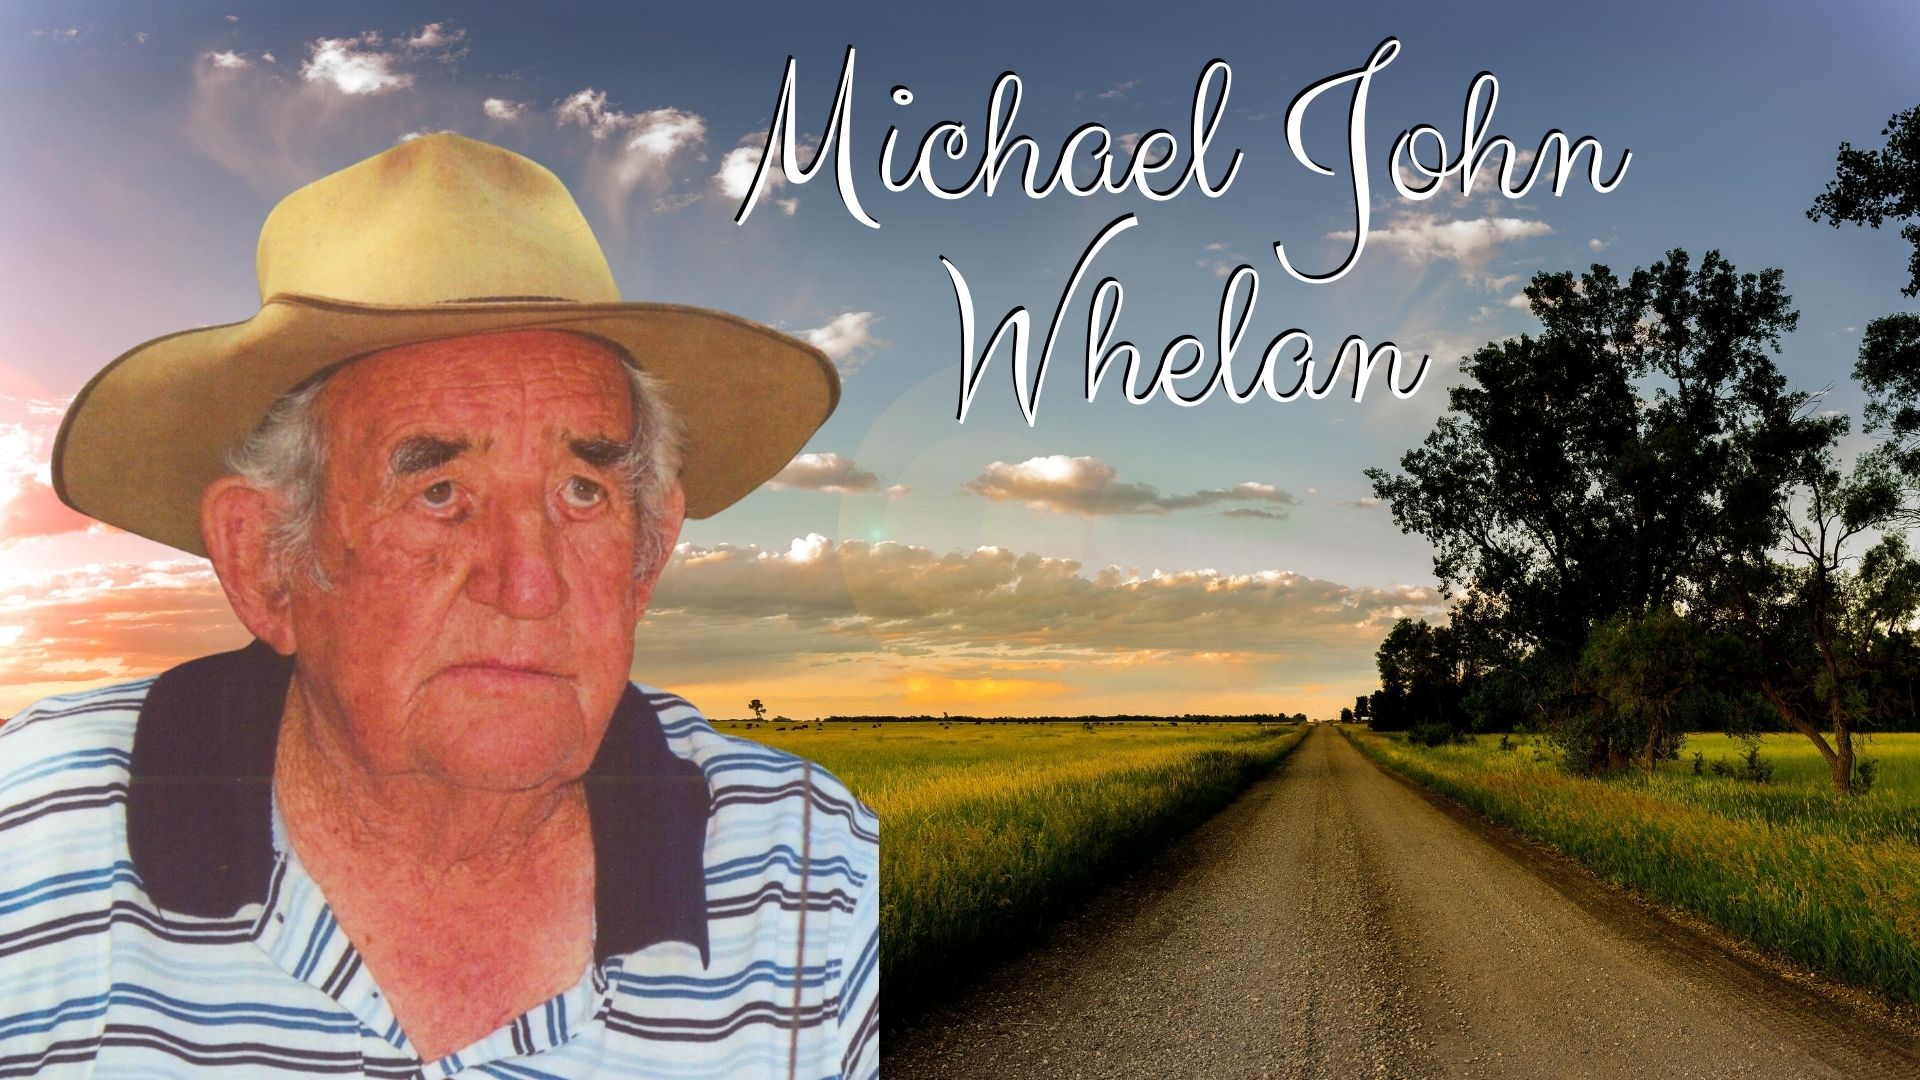 Michael John Whelan